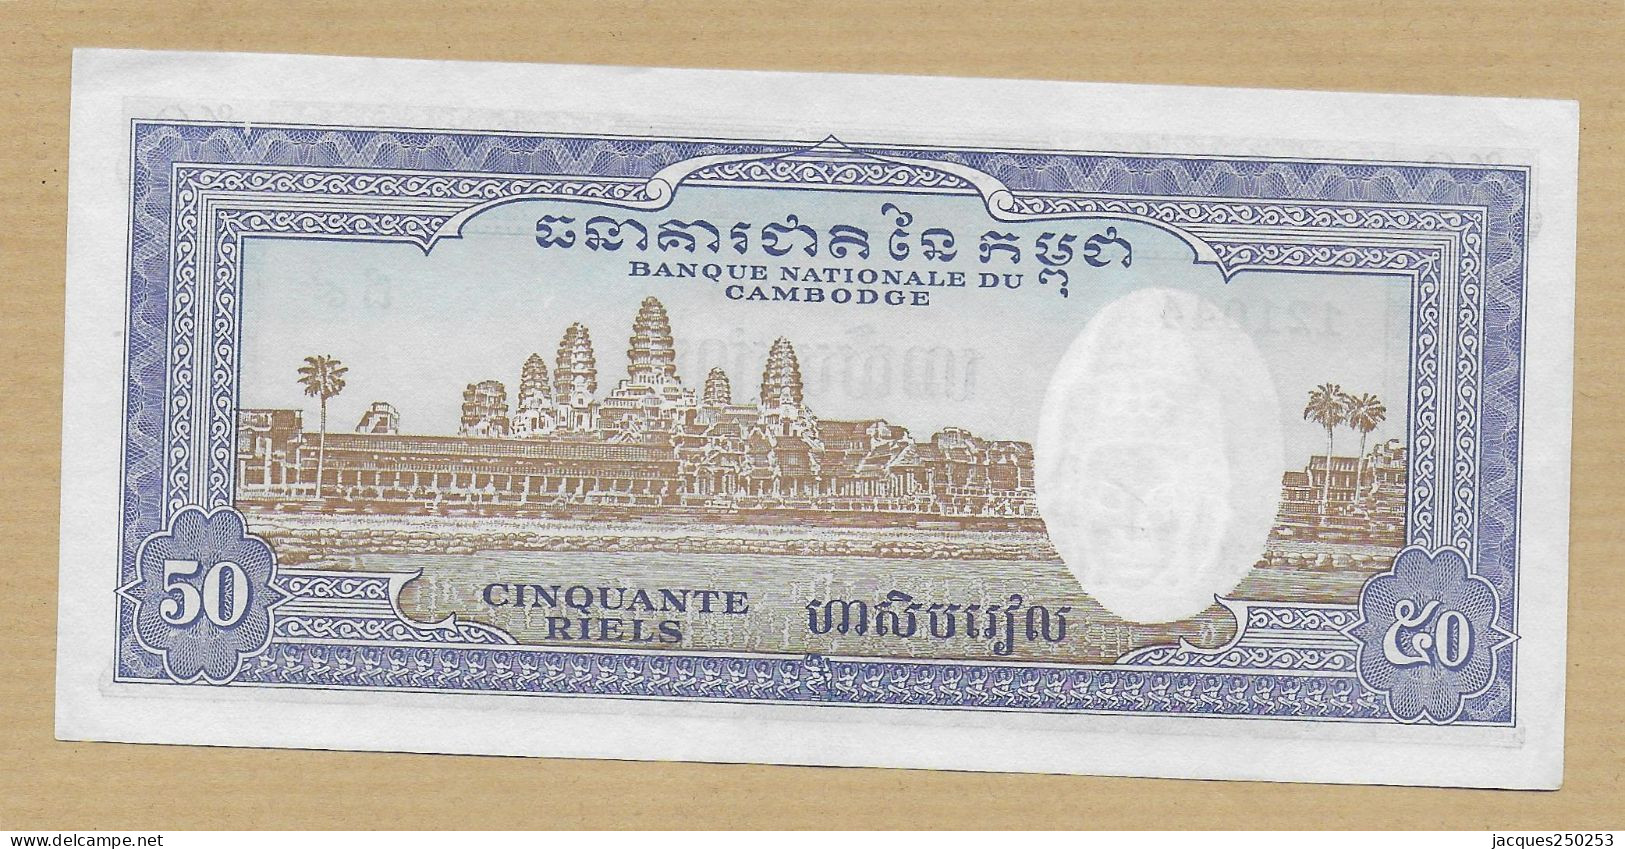 50 RIELS CAMBODGE NEUF - Cambodia